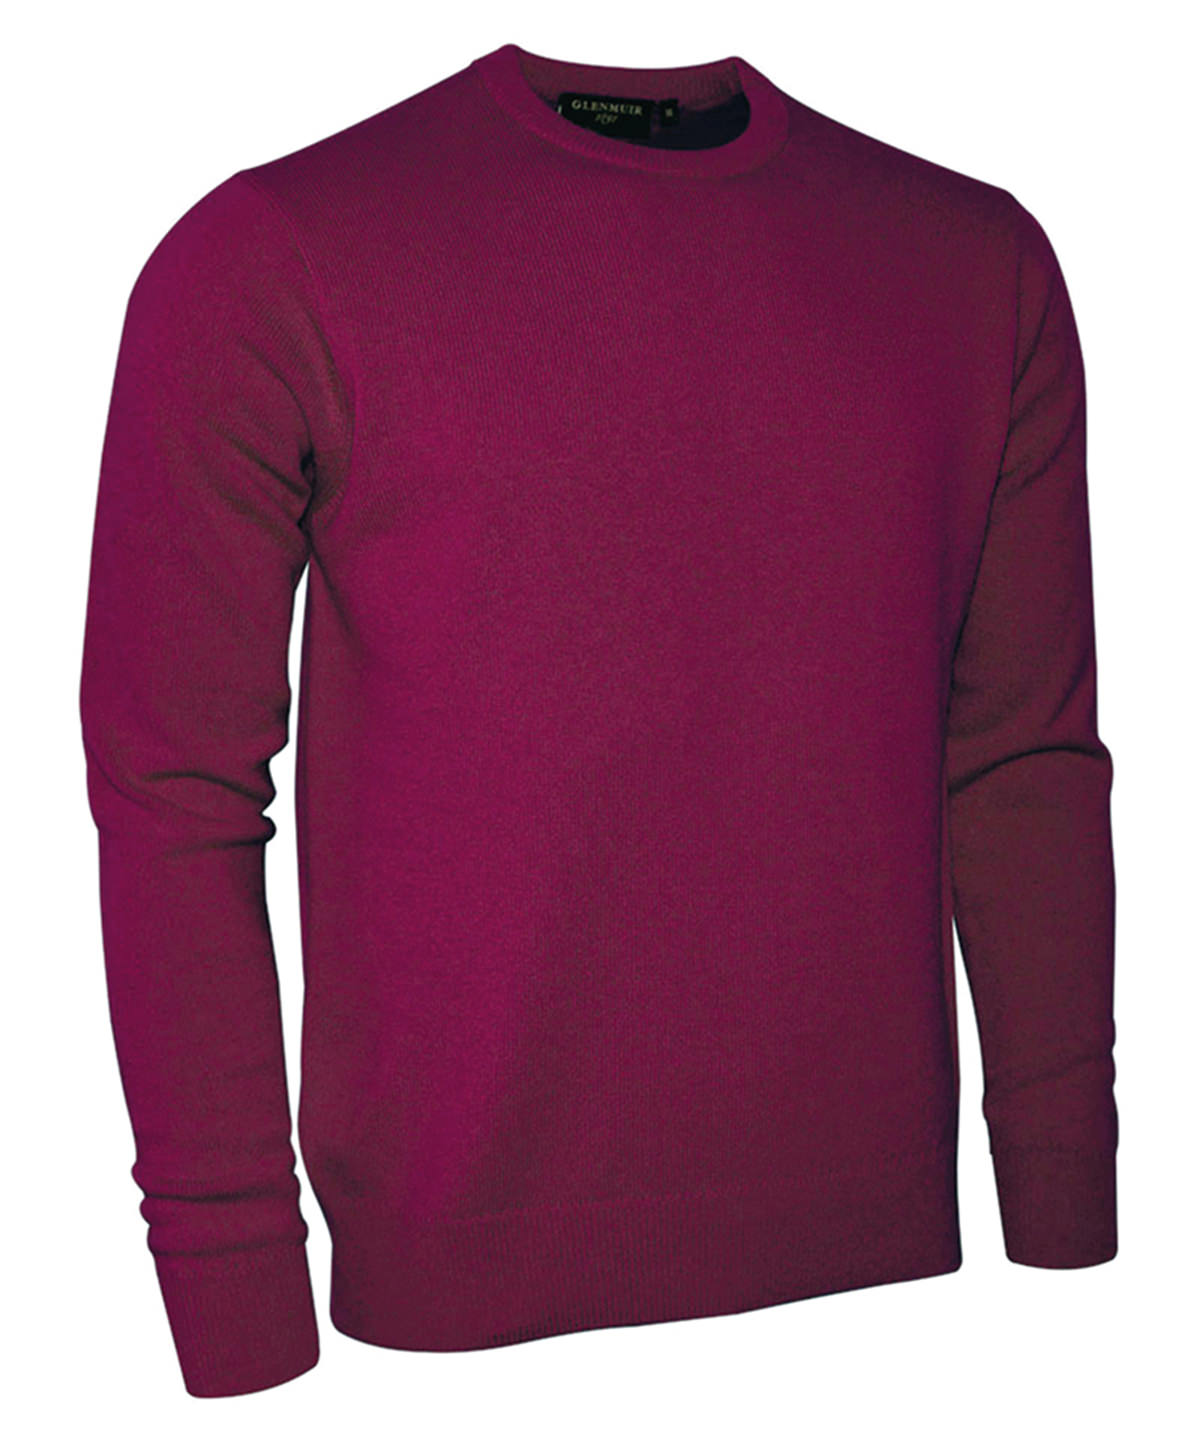 g.Morar lambswool crew neck sweater (MKL5902CN-MOR)